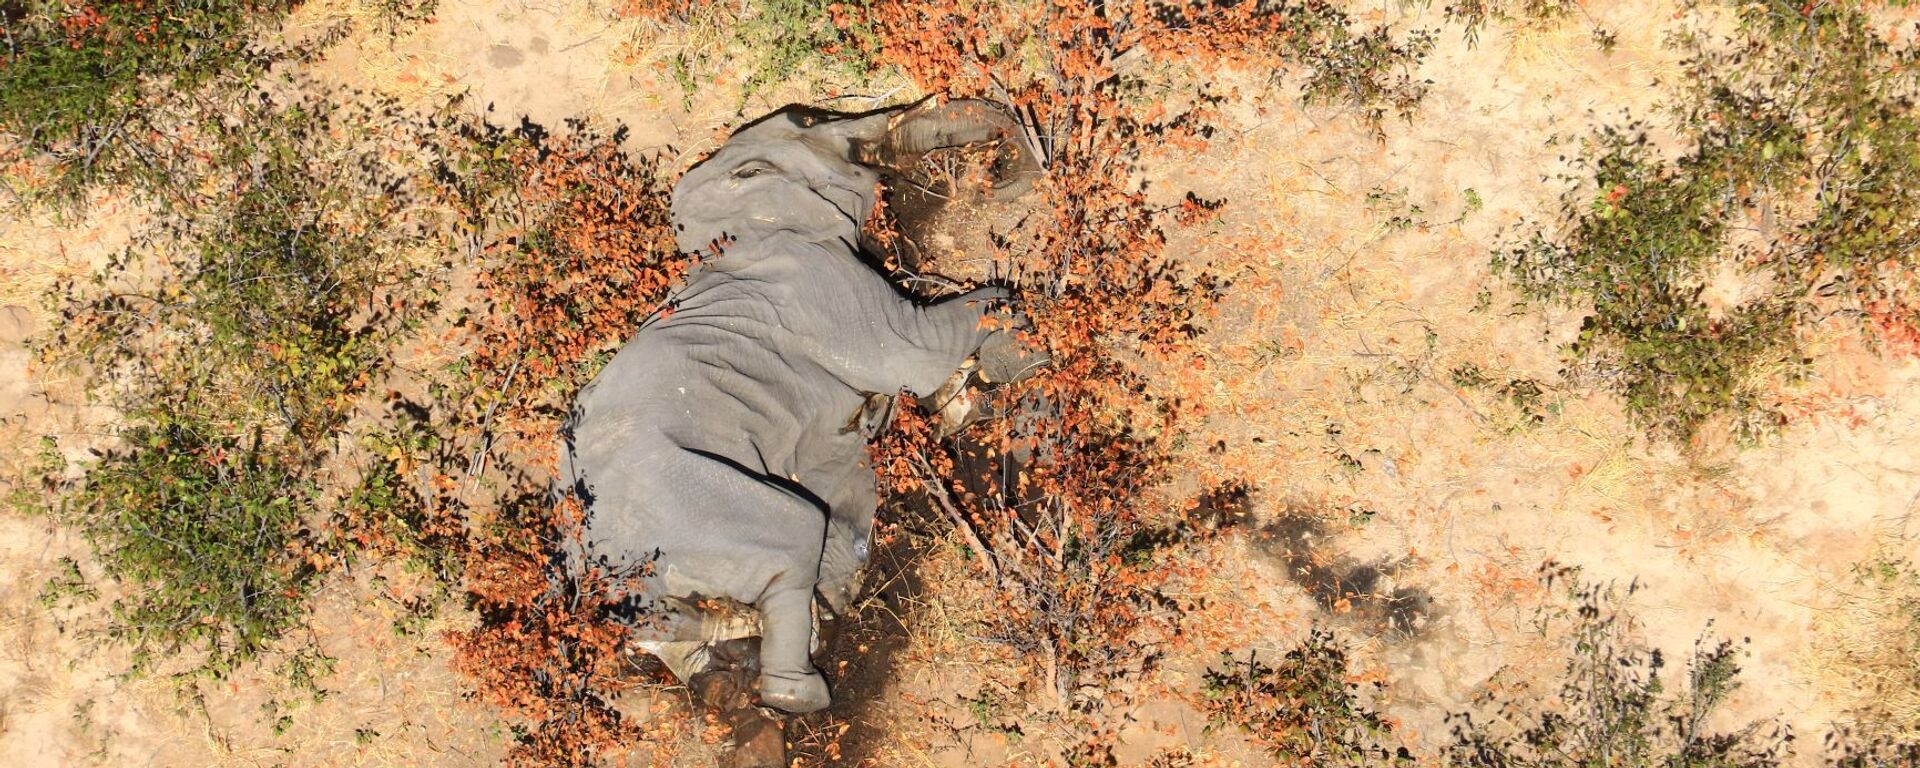 Elefantes muertos en Botsuana - Sputnik Mundo, 1920, 29.01.2021